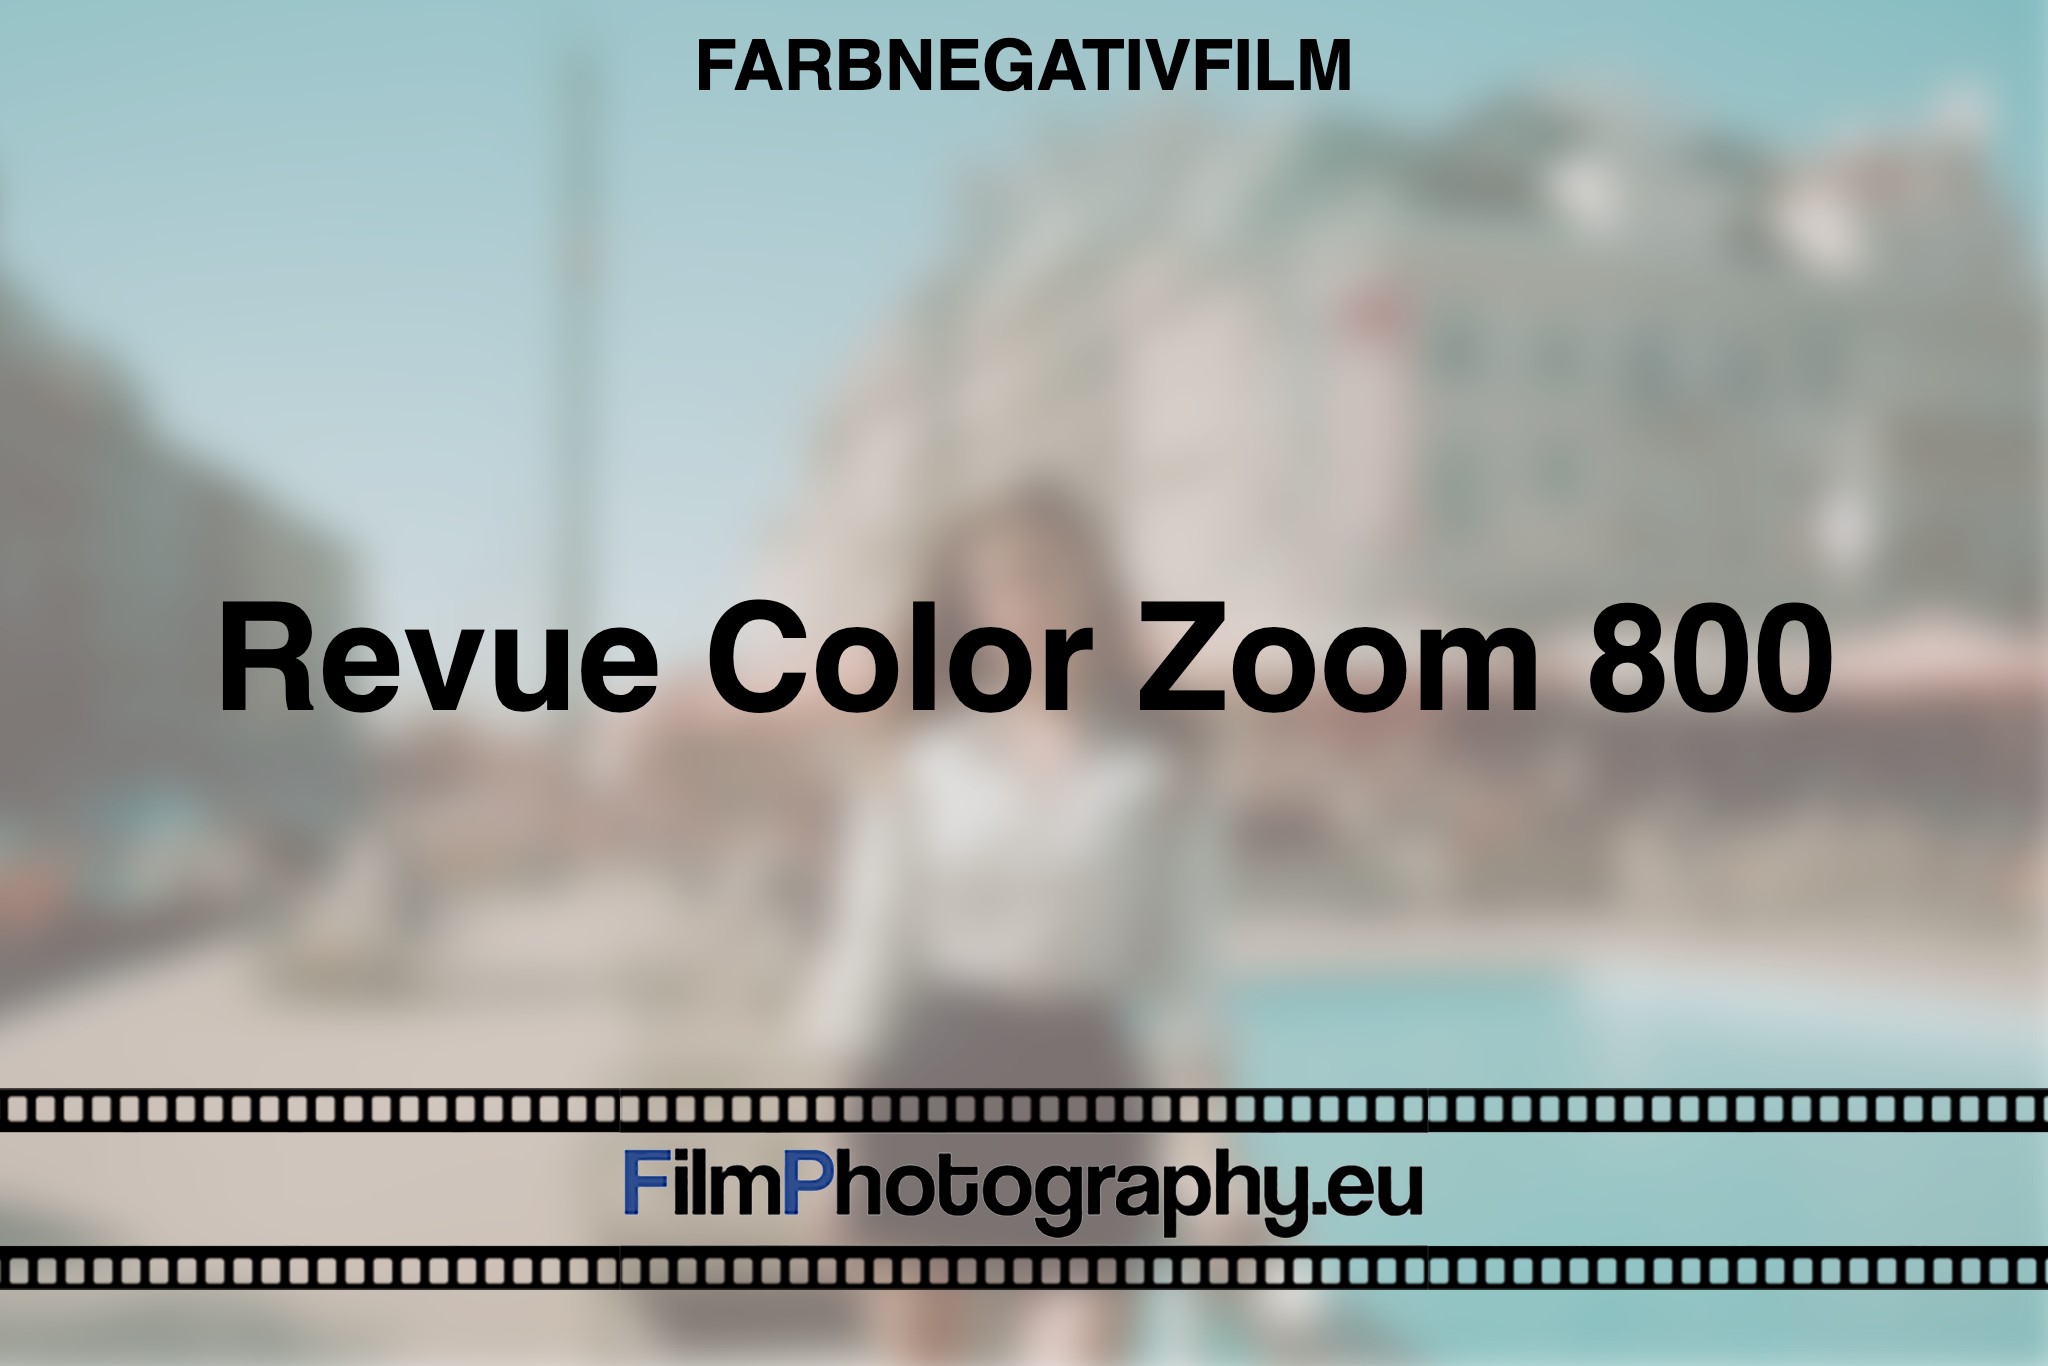 revue-color-zoom-800-farbnegativfilm-bnv